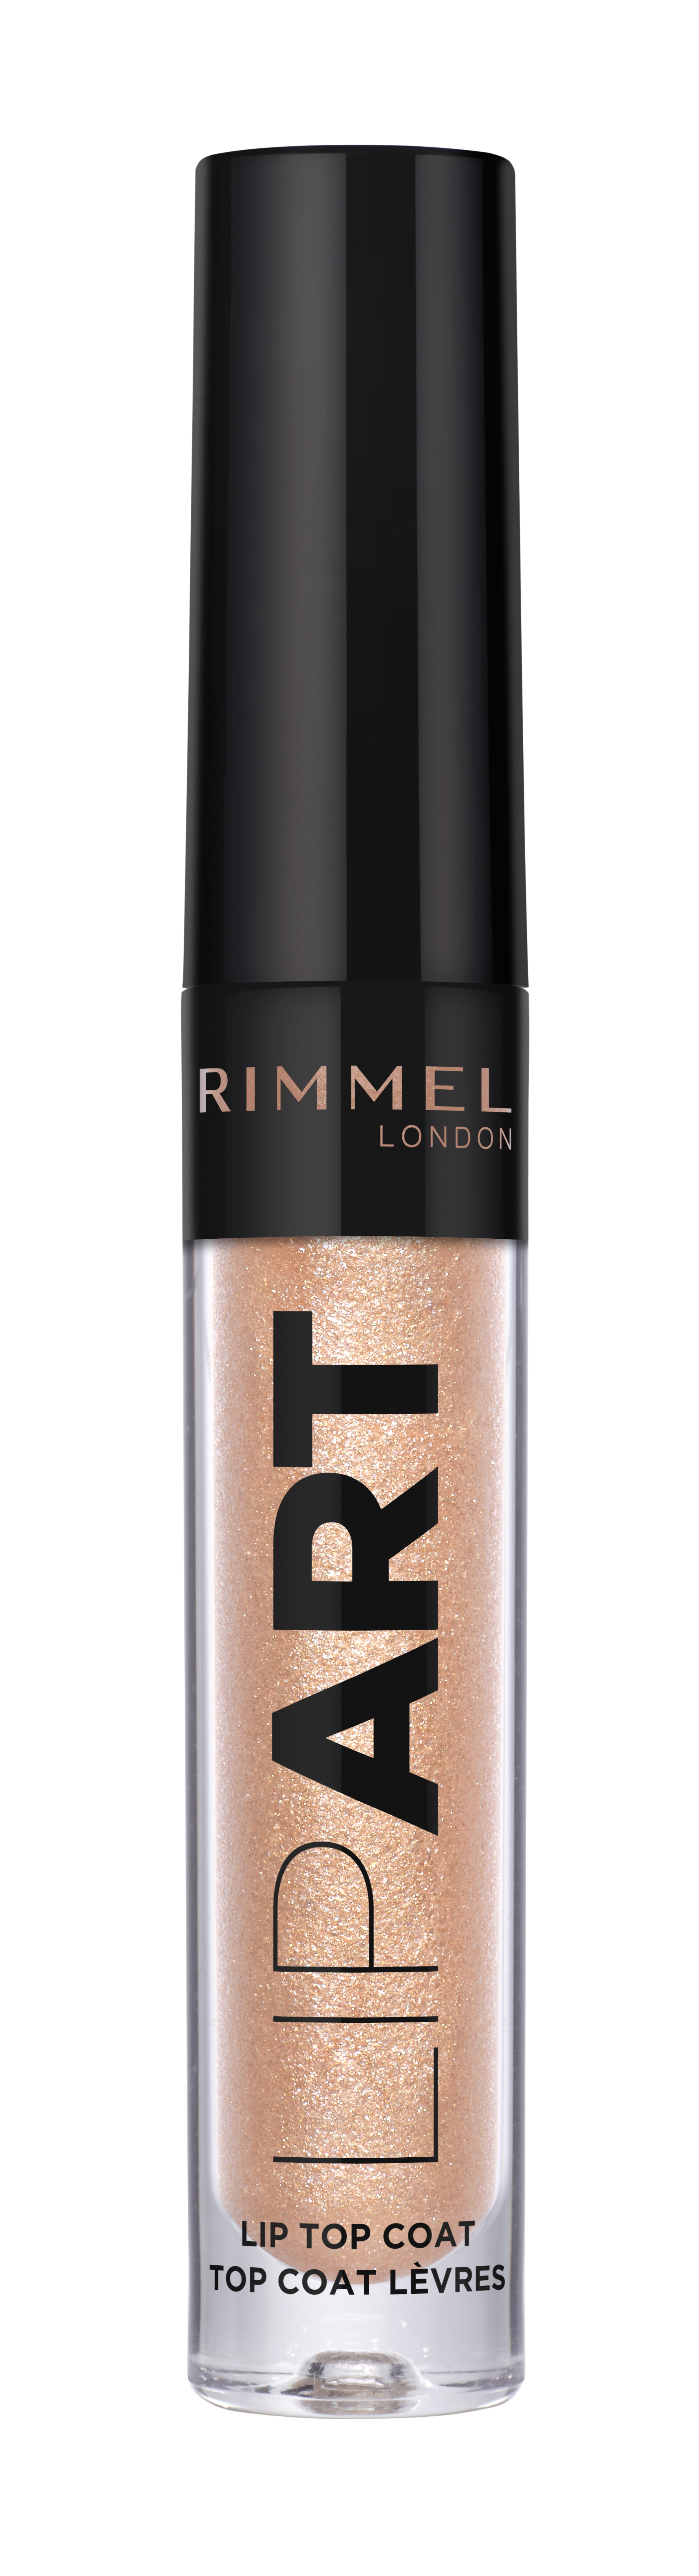 Rimmel London Rimmel Lip Art Topcoat Lipgloss - 030 Blush Gold